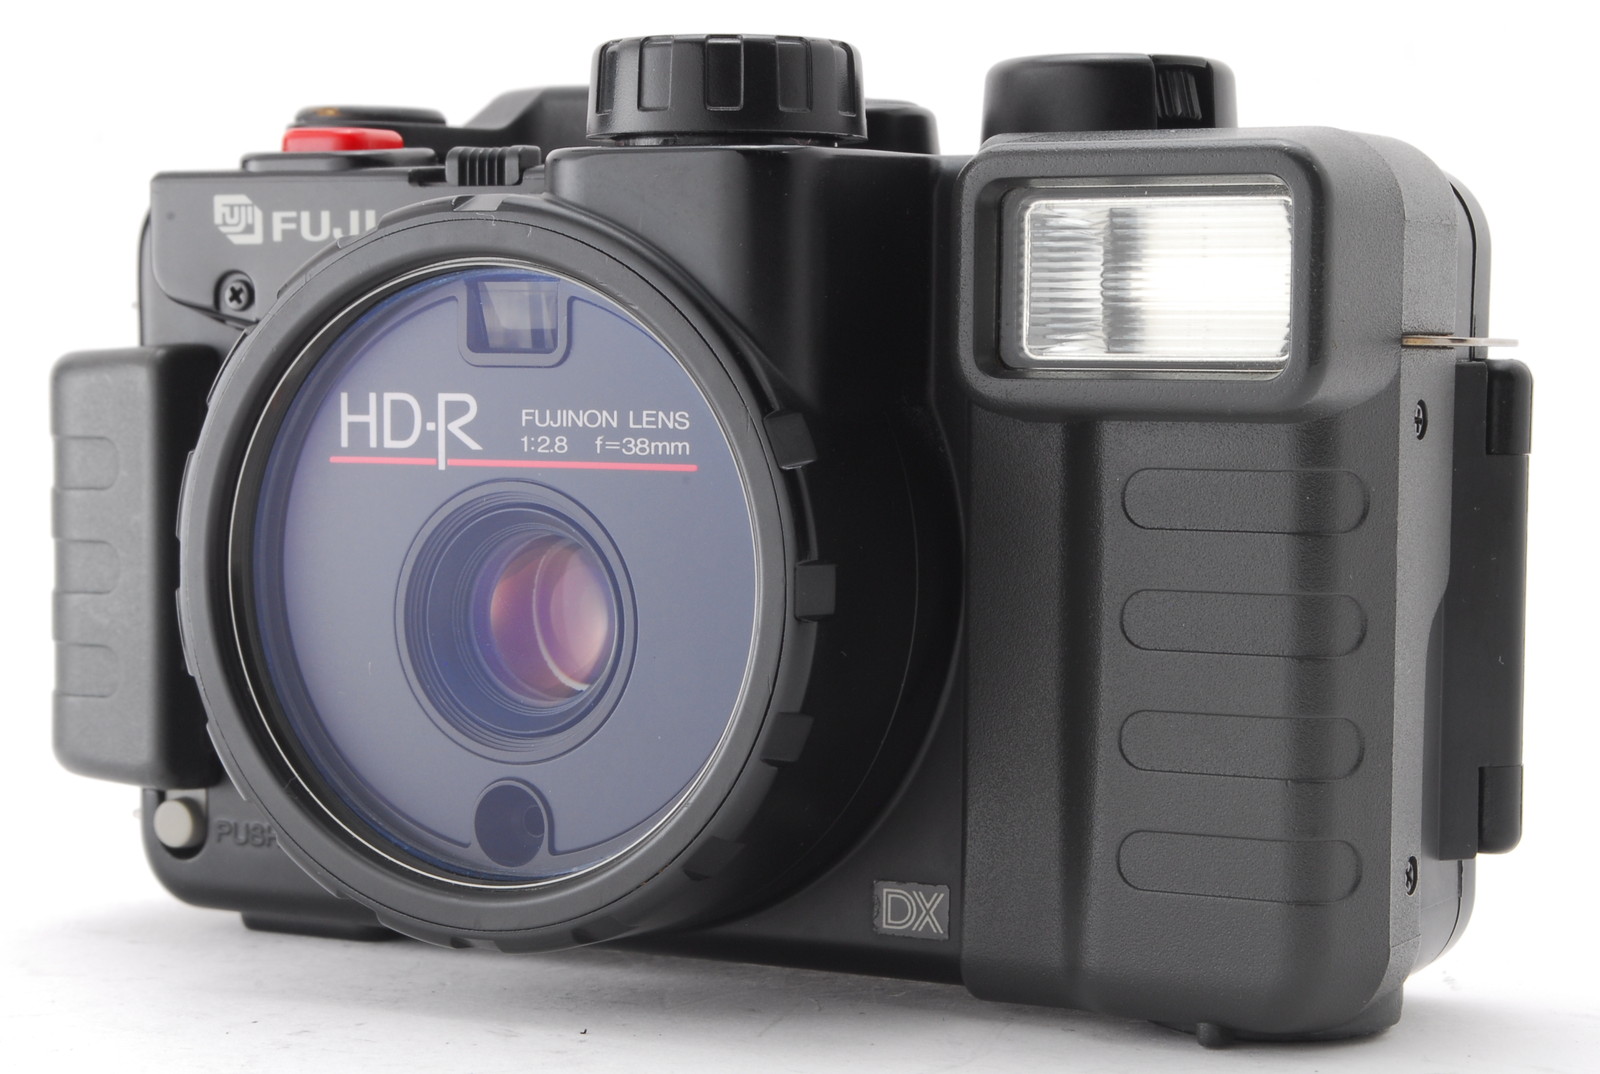 PROMOTION. NEAR MINT Fuji Film Fuji HD-R DX DON 35mm Film Point and Shoot Camera from Japan